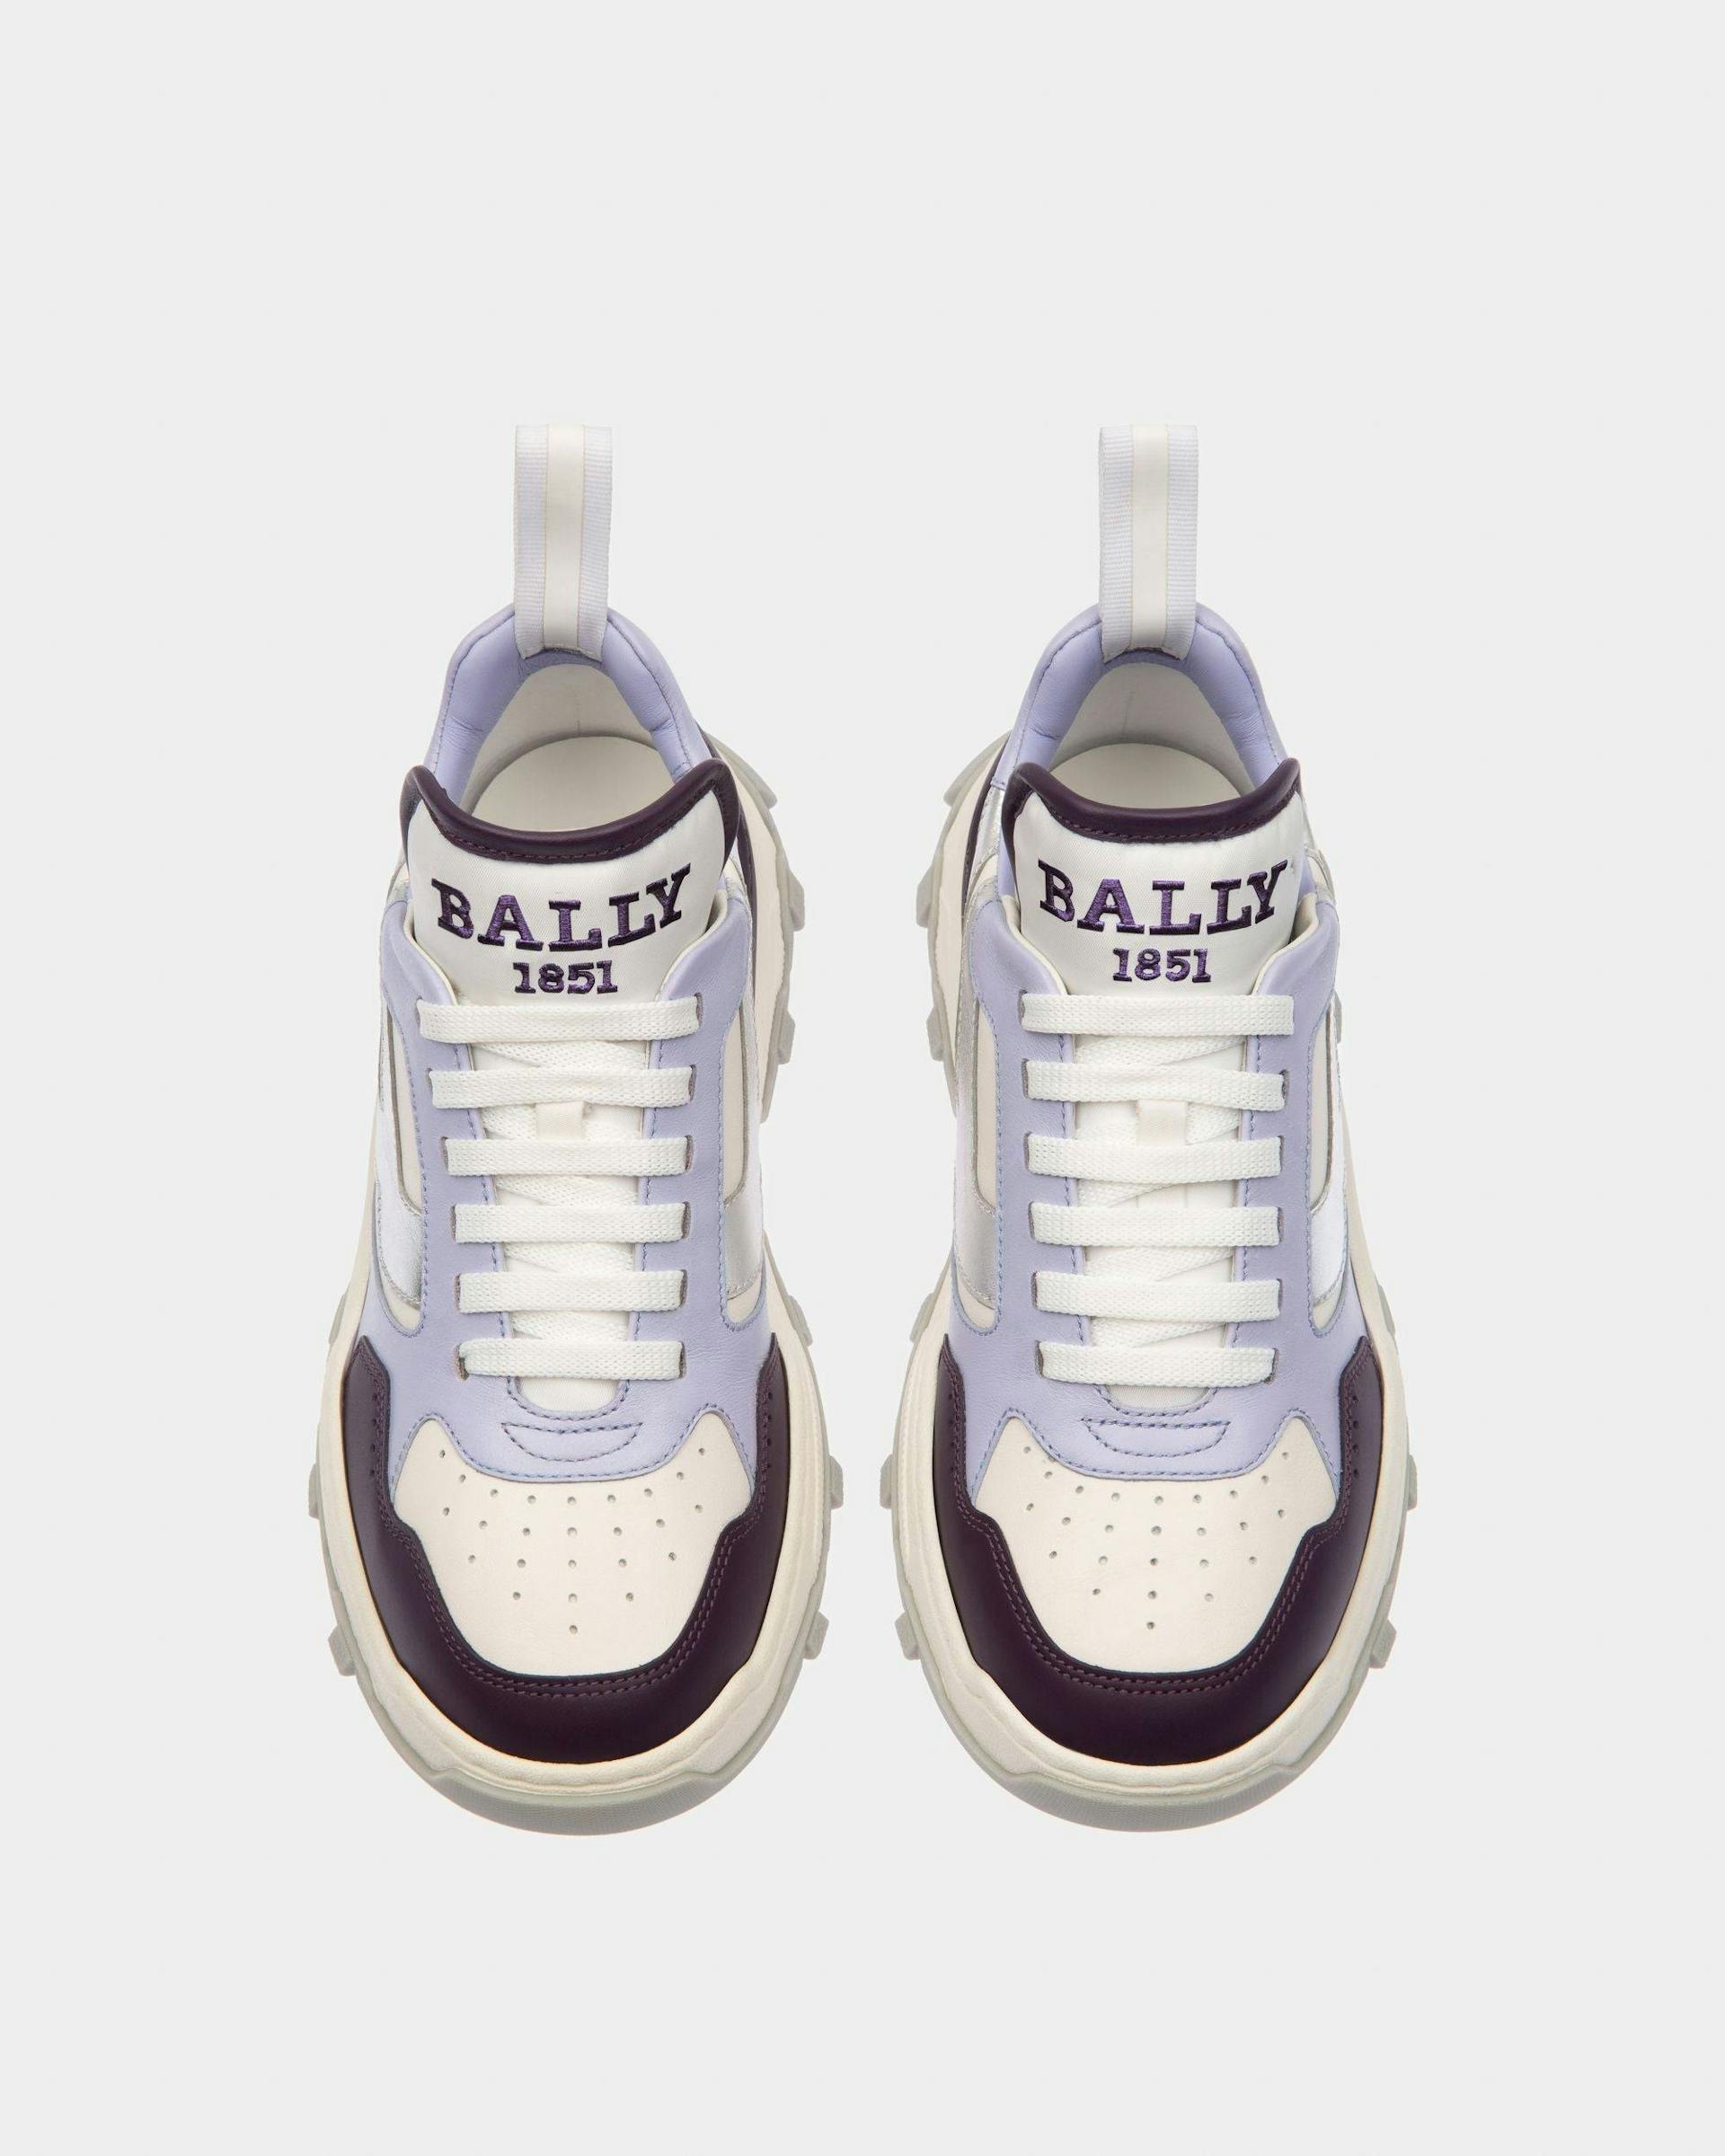 Holden Sneakers In Pelle E Tessuto Viola E Bianco - Donna - Bally - 02